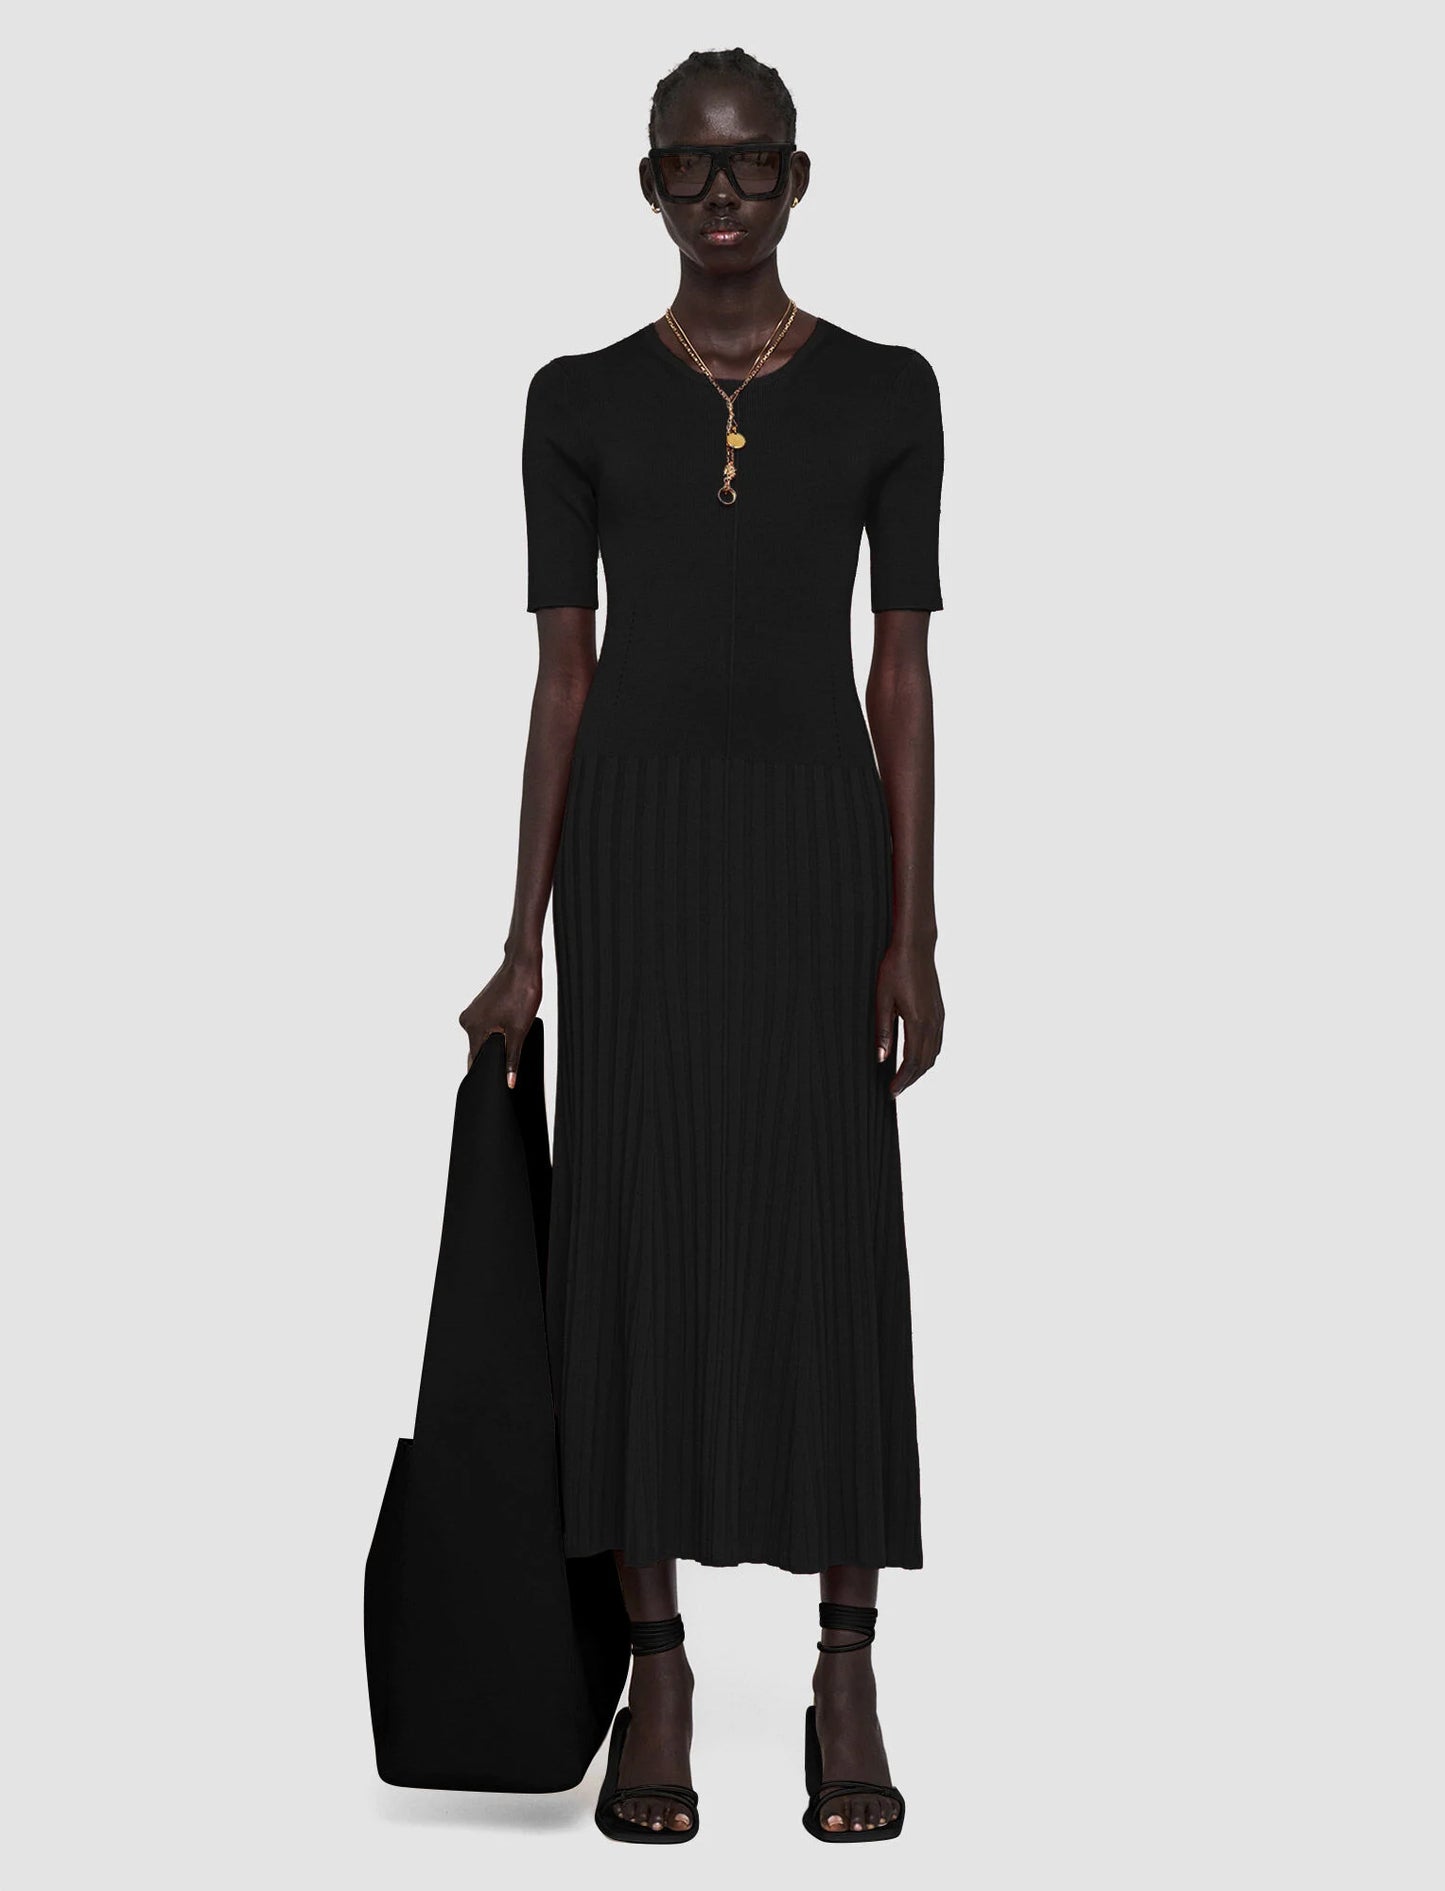 Satiny Rib Knitted Dress Black